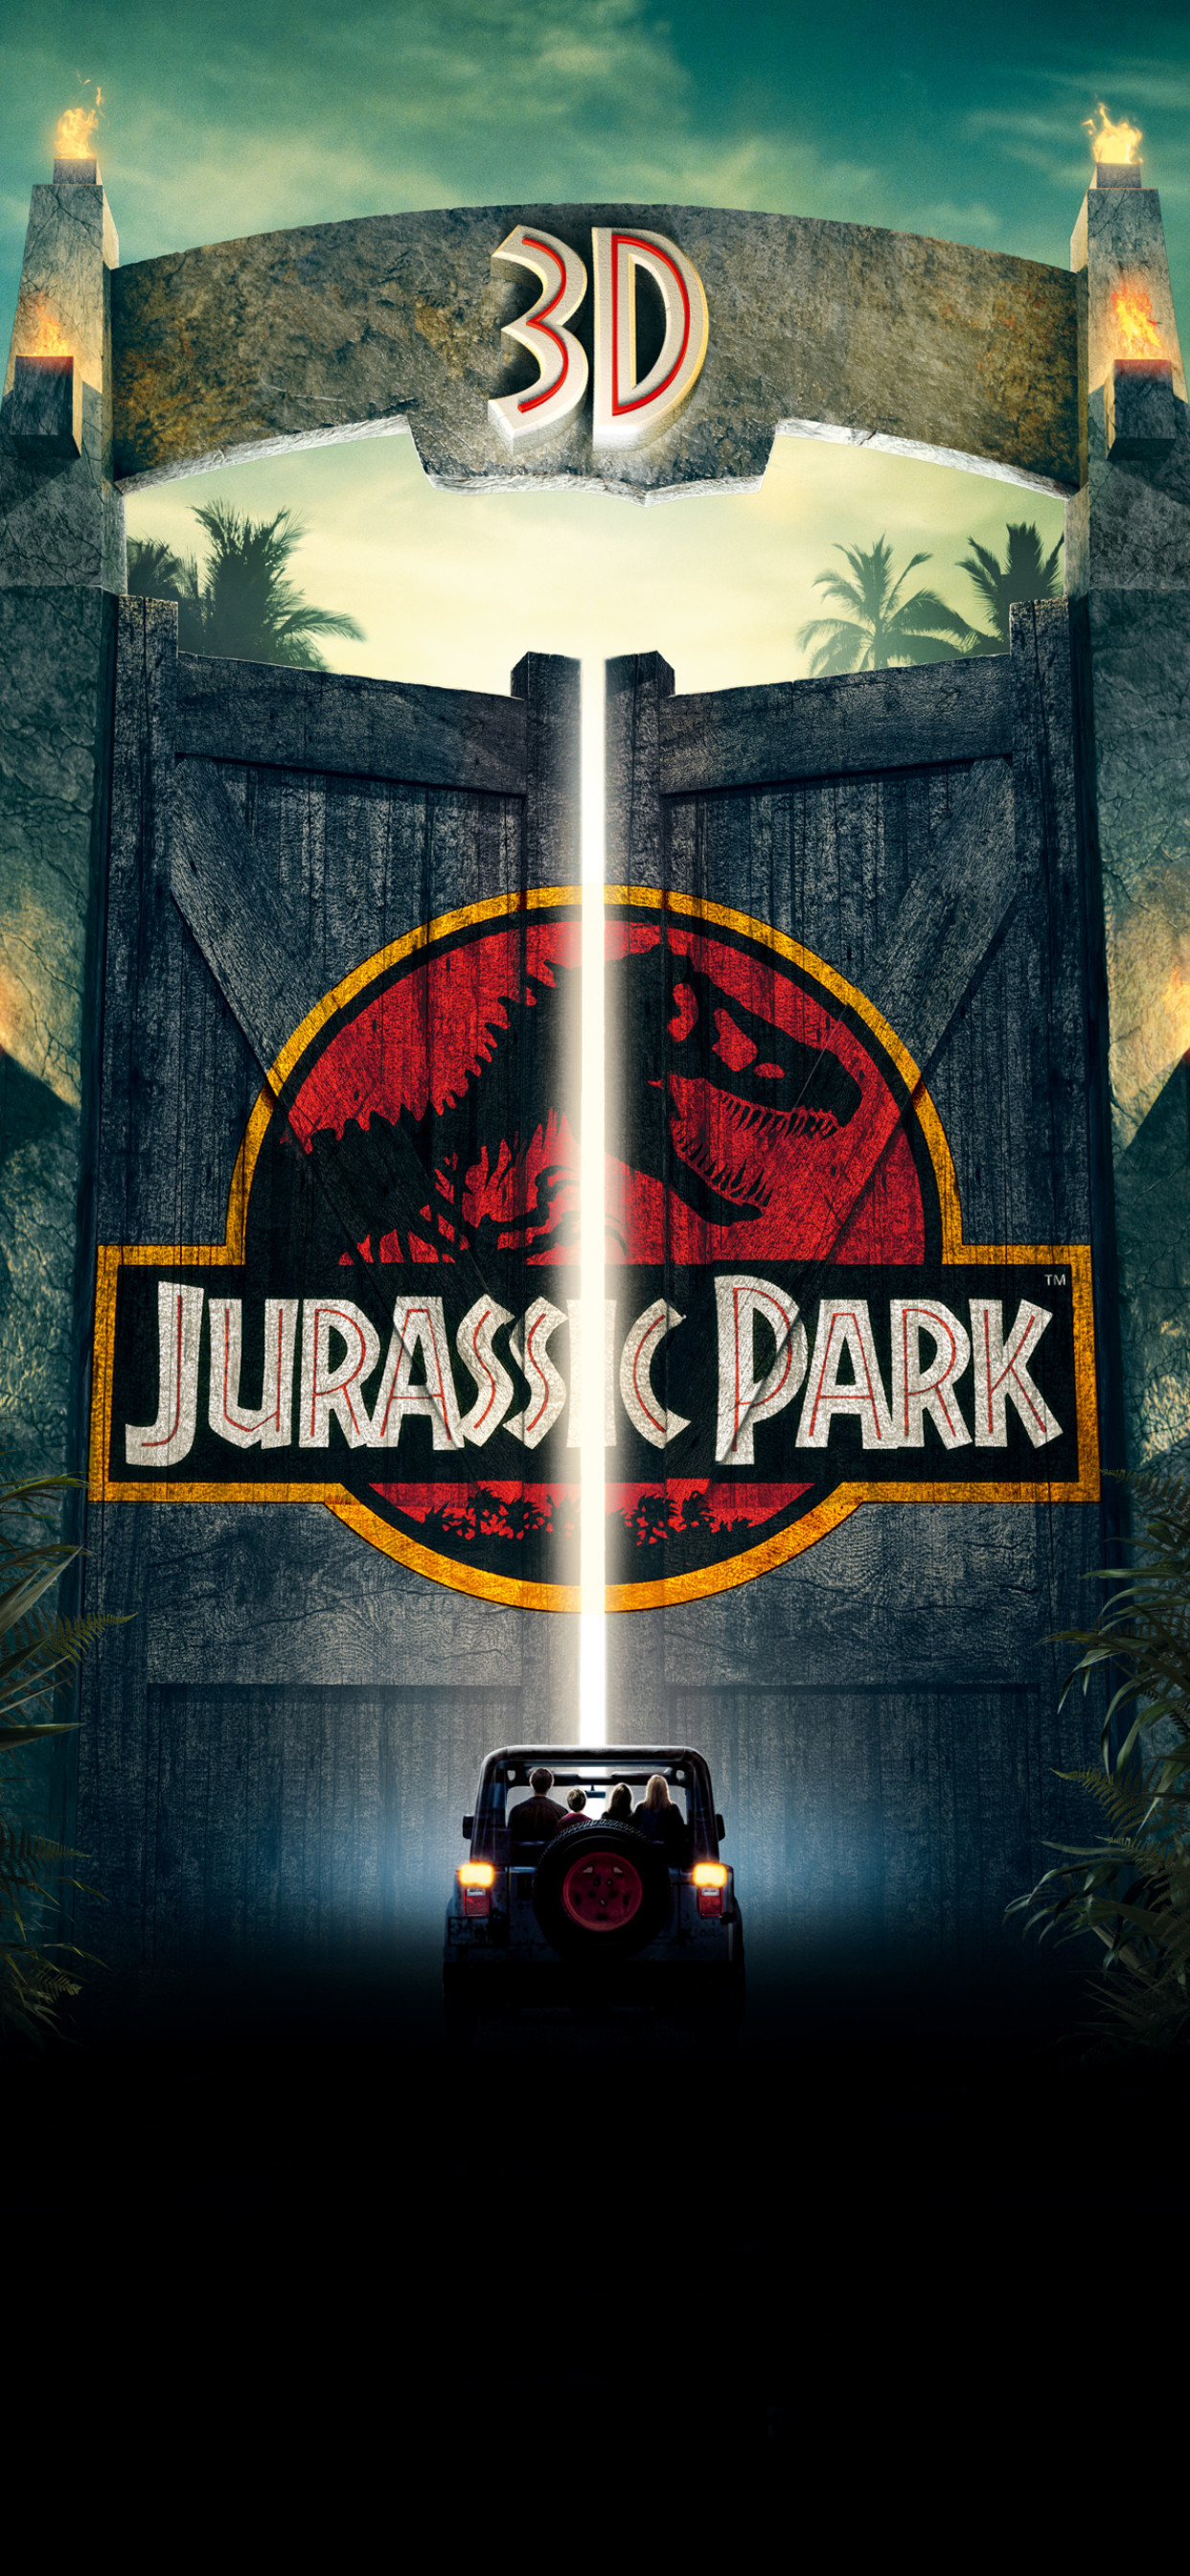 Jurassic Park 3d Movie Poster - HD Wallpaper 